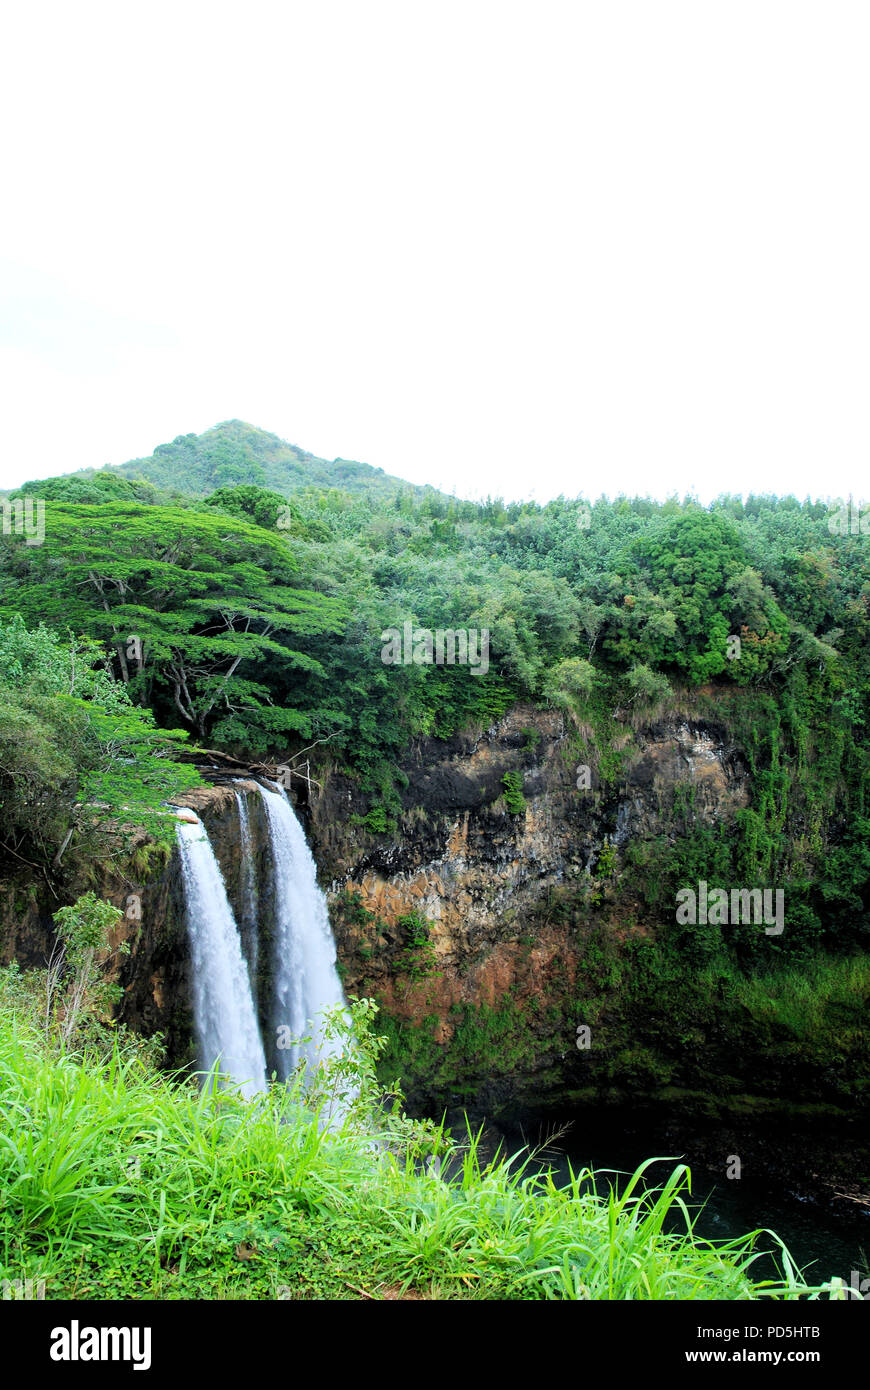 The majestic Wailua Falls, in Kauai, Hawaii, with green lush rain forest and vegetation around Stock Photo